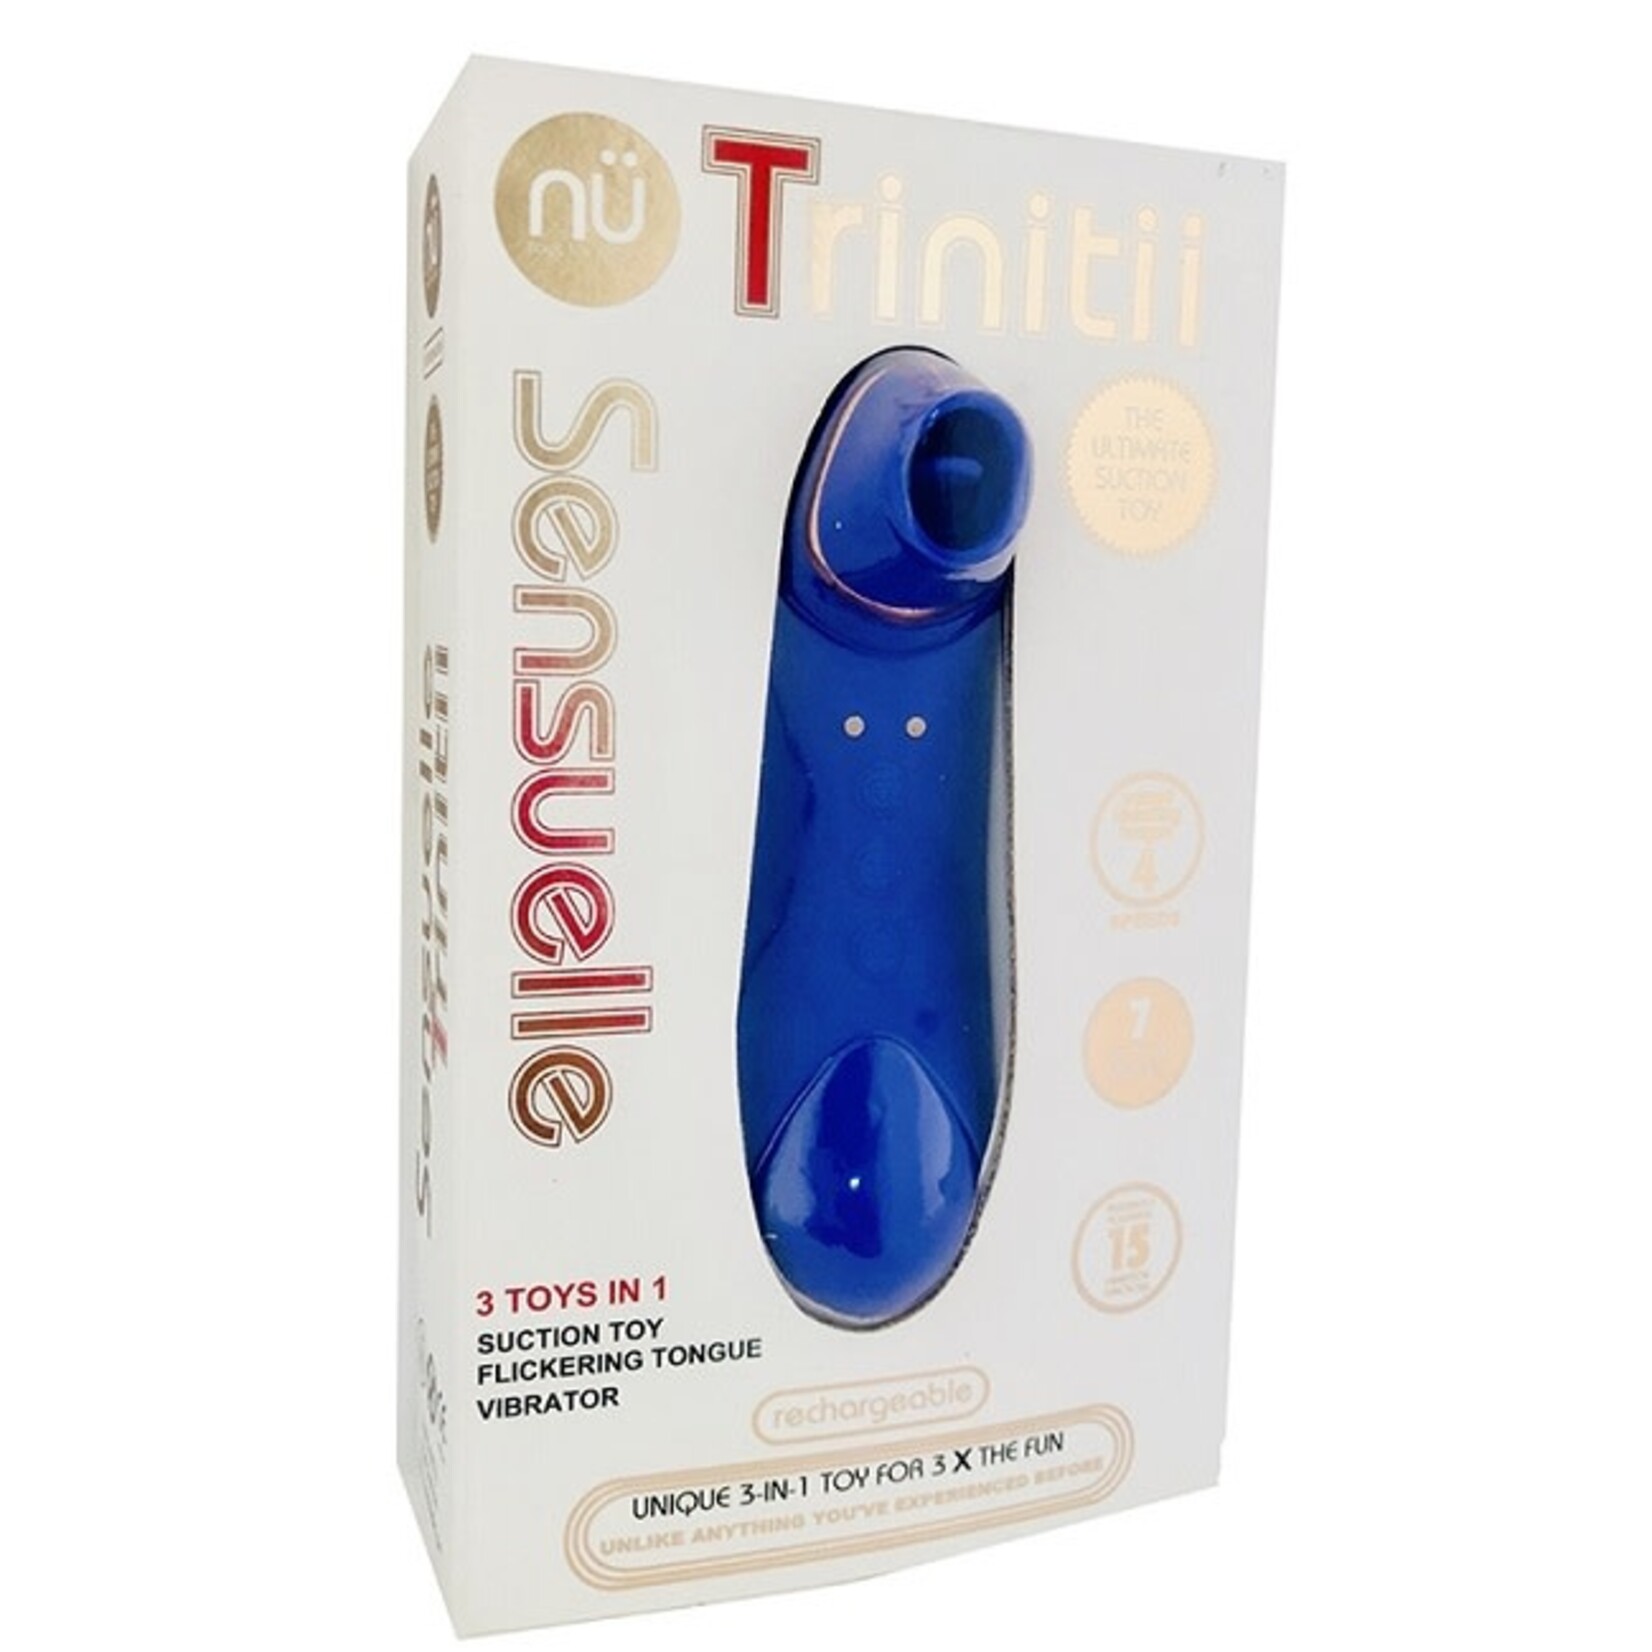 nü Sensuelle nü Sensuelle Trinitii 26-Function Rechargeable Flickering Tongue Vibrator with Suction